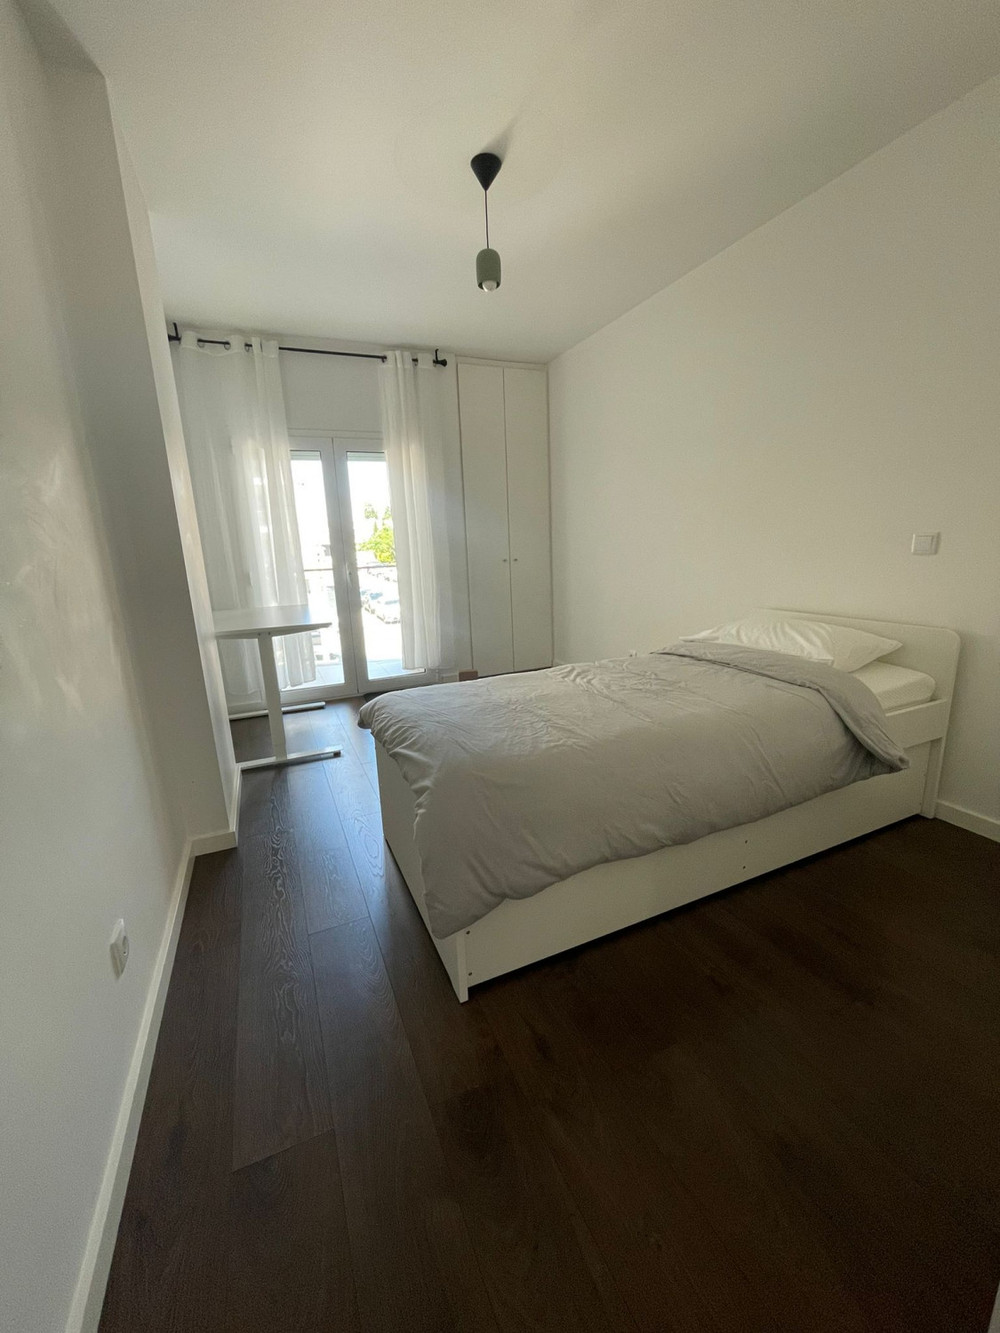 New One bedroom luxury apt in Carcavelos